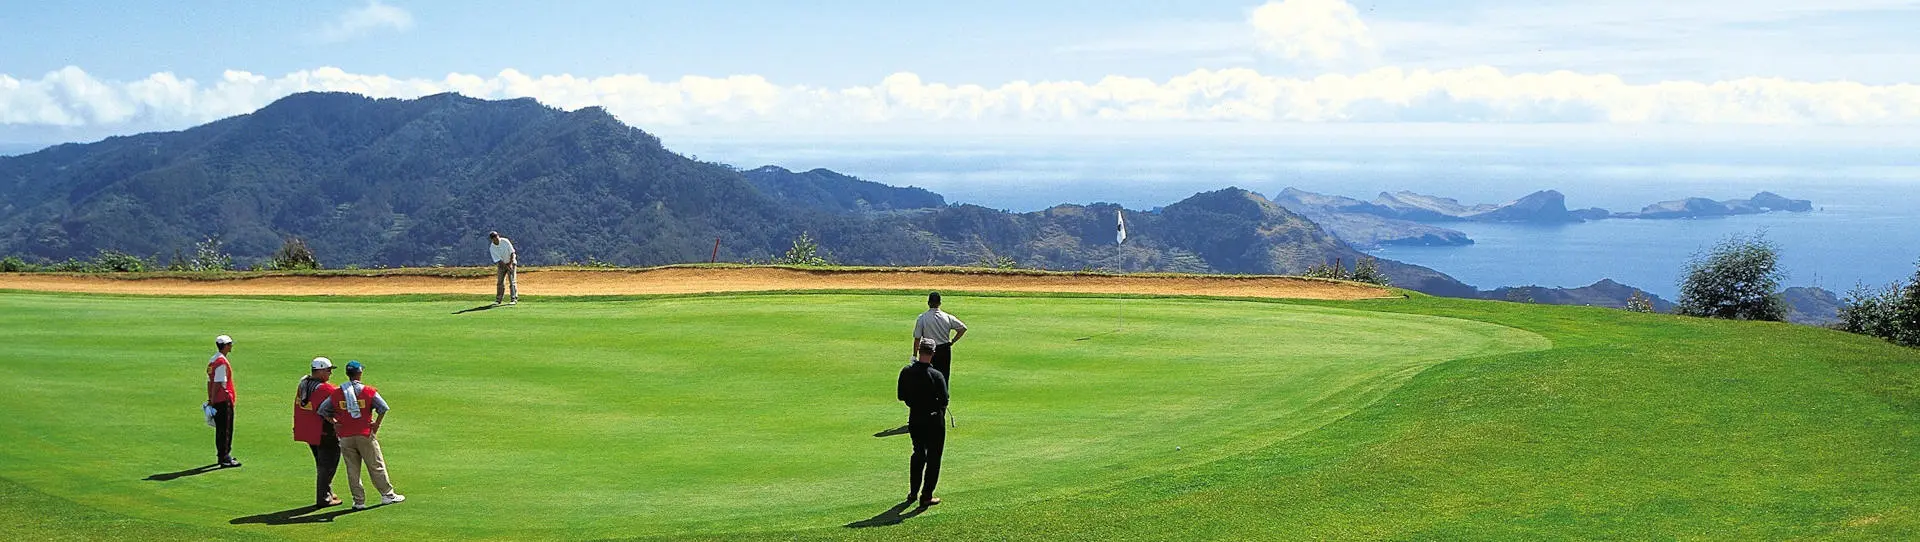 Portugal golf holidays - Santo da Serra Esperience w/ Buggy Included - Photo 1